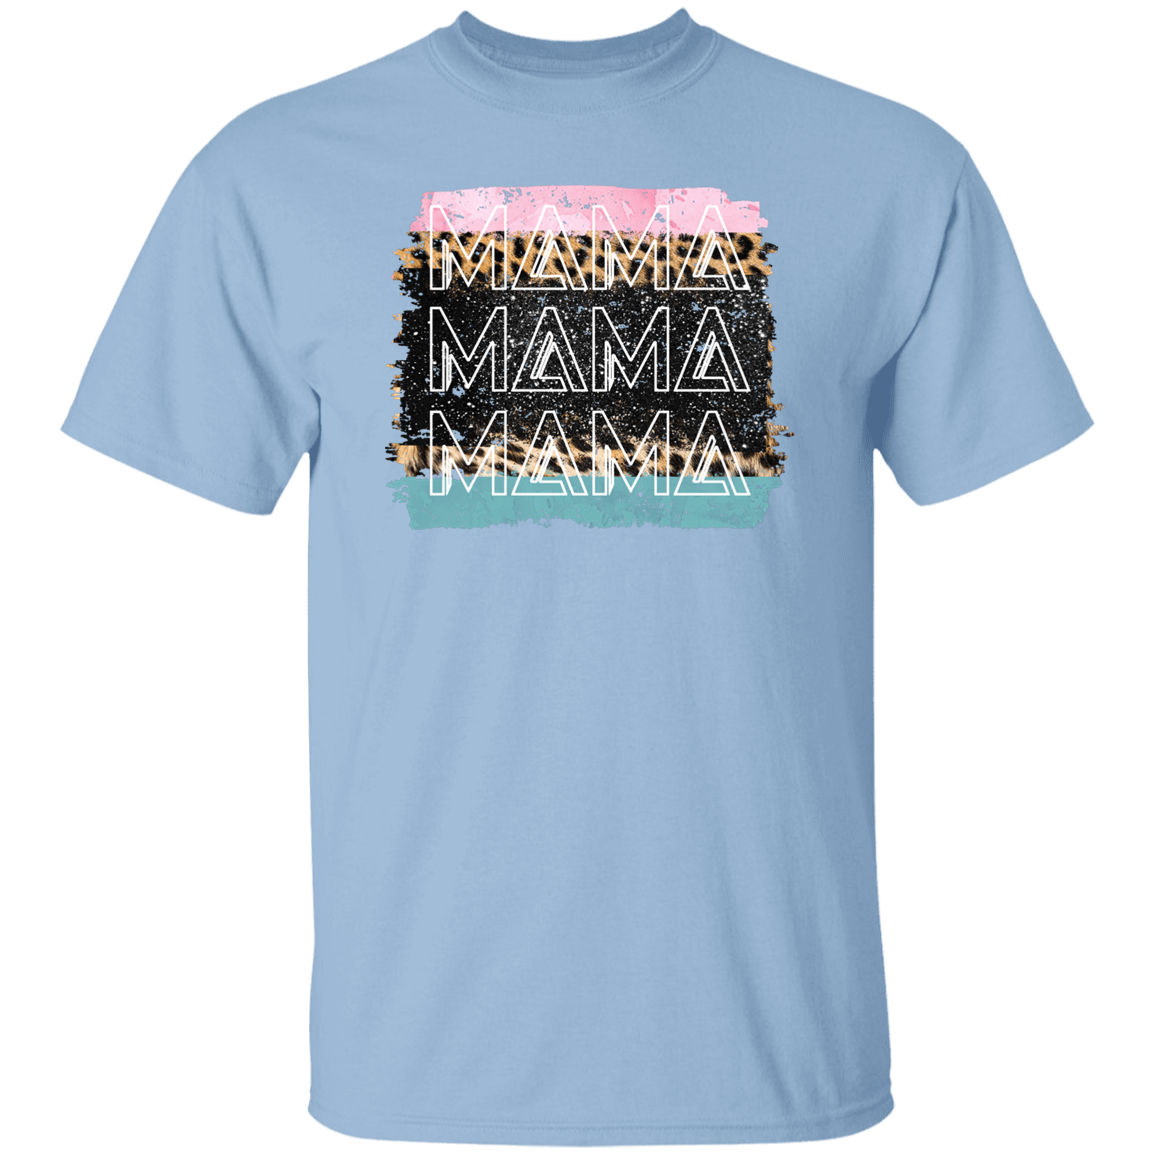 Mama 5.3 oz. T-Shirt